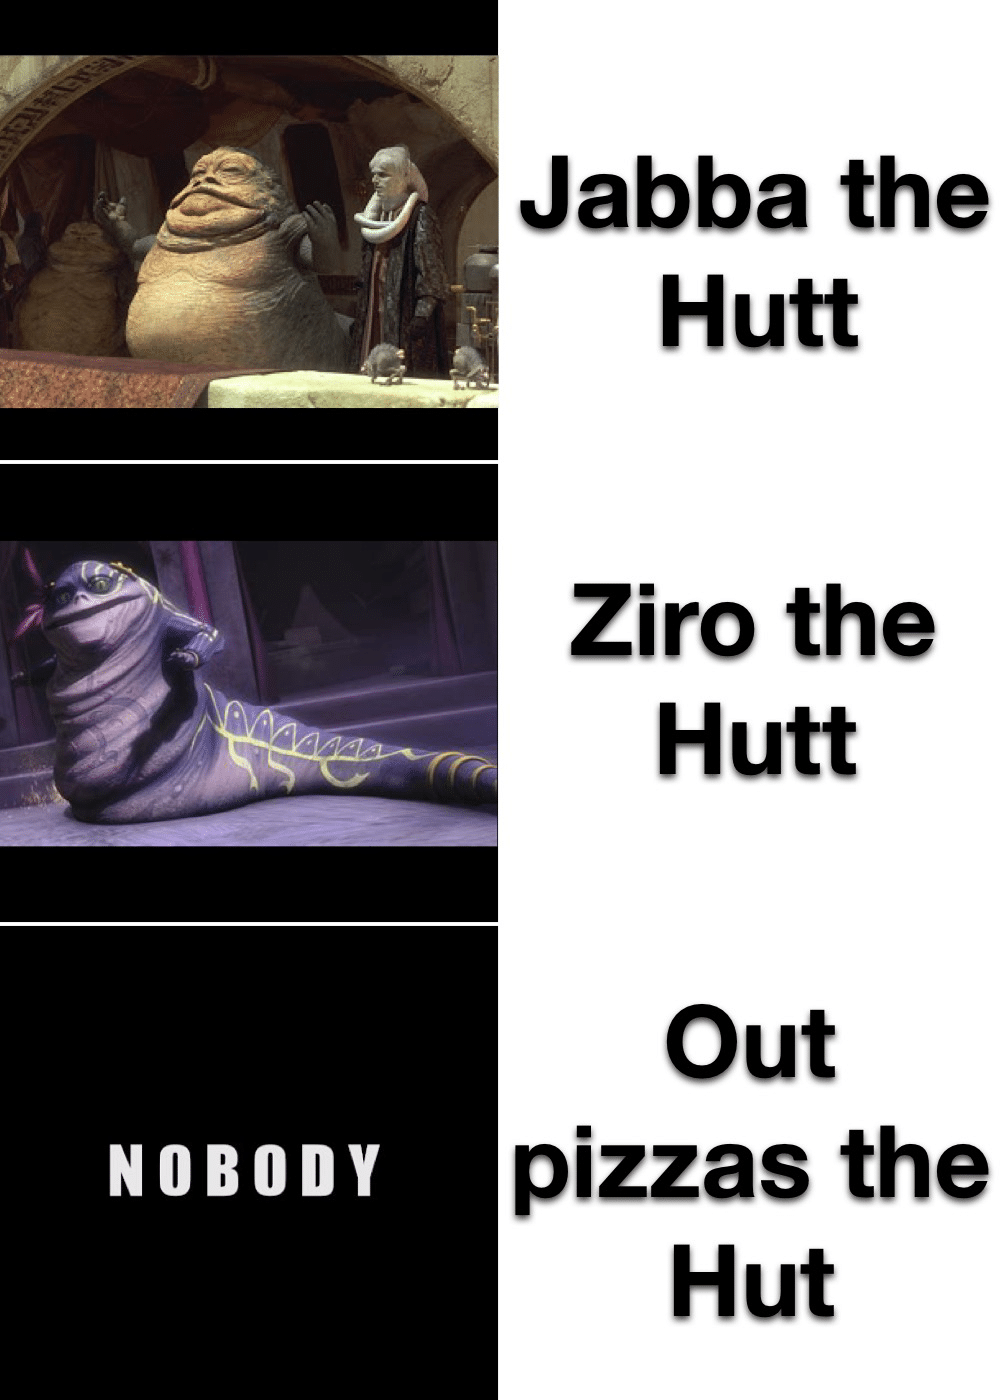 prequel-memes star-wars-memes prequel-memes text: NOBODY Jabba the Hutt Ziro the Hutt Out pizzas the Hut 